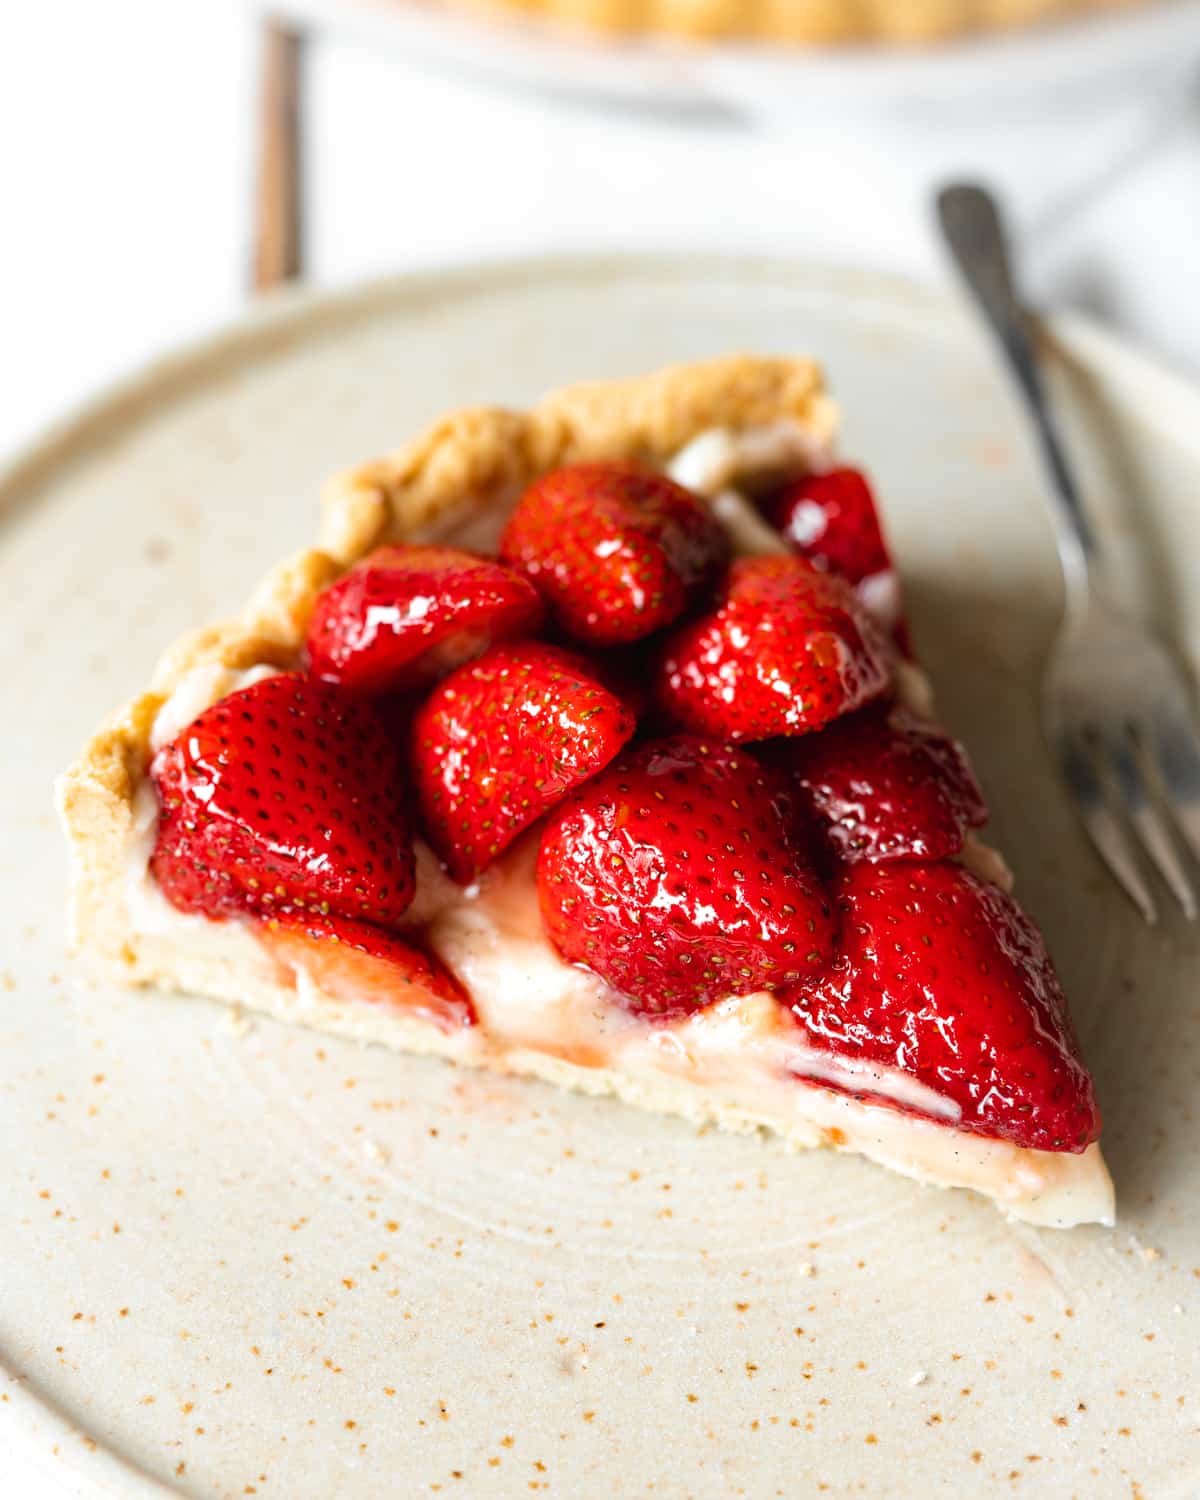 Vegan Strawberry Tart from Addicted to Dates - Vegan Strawberry Dessert Recipes